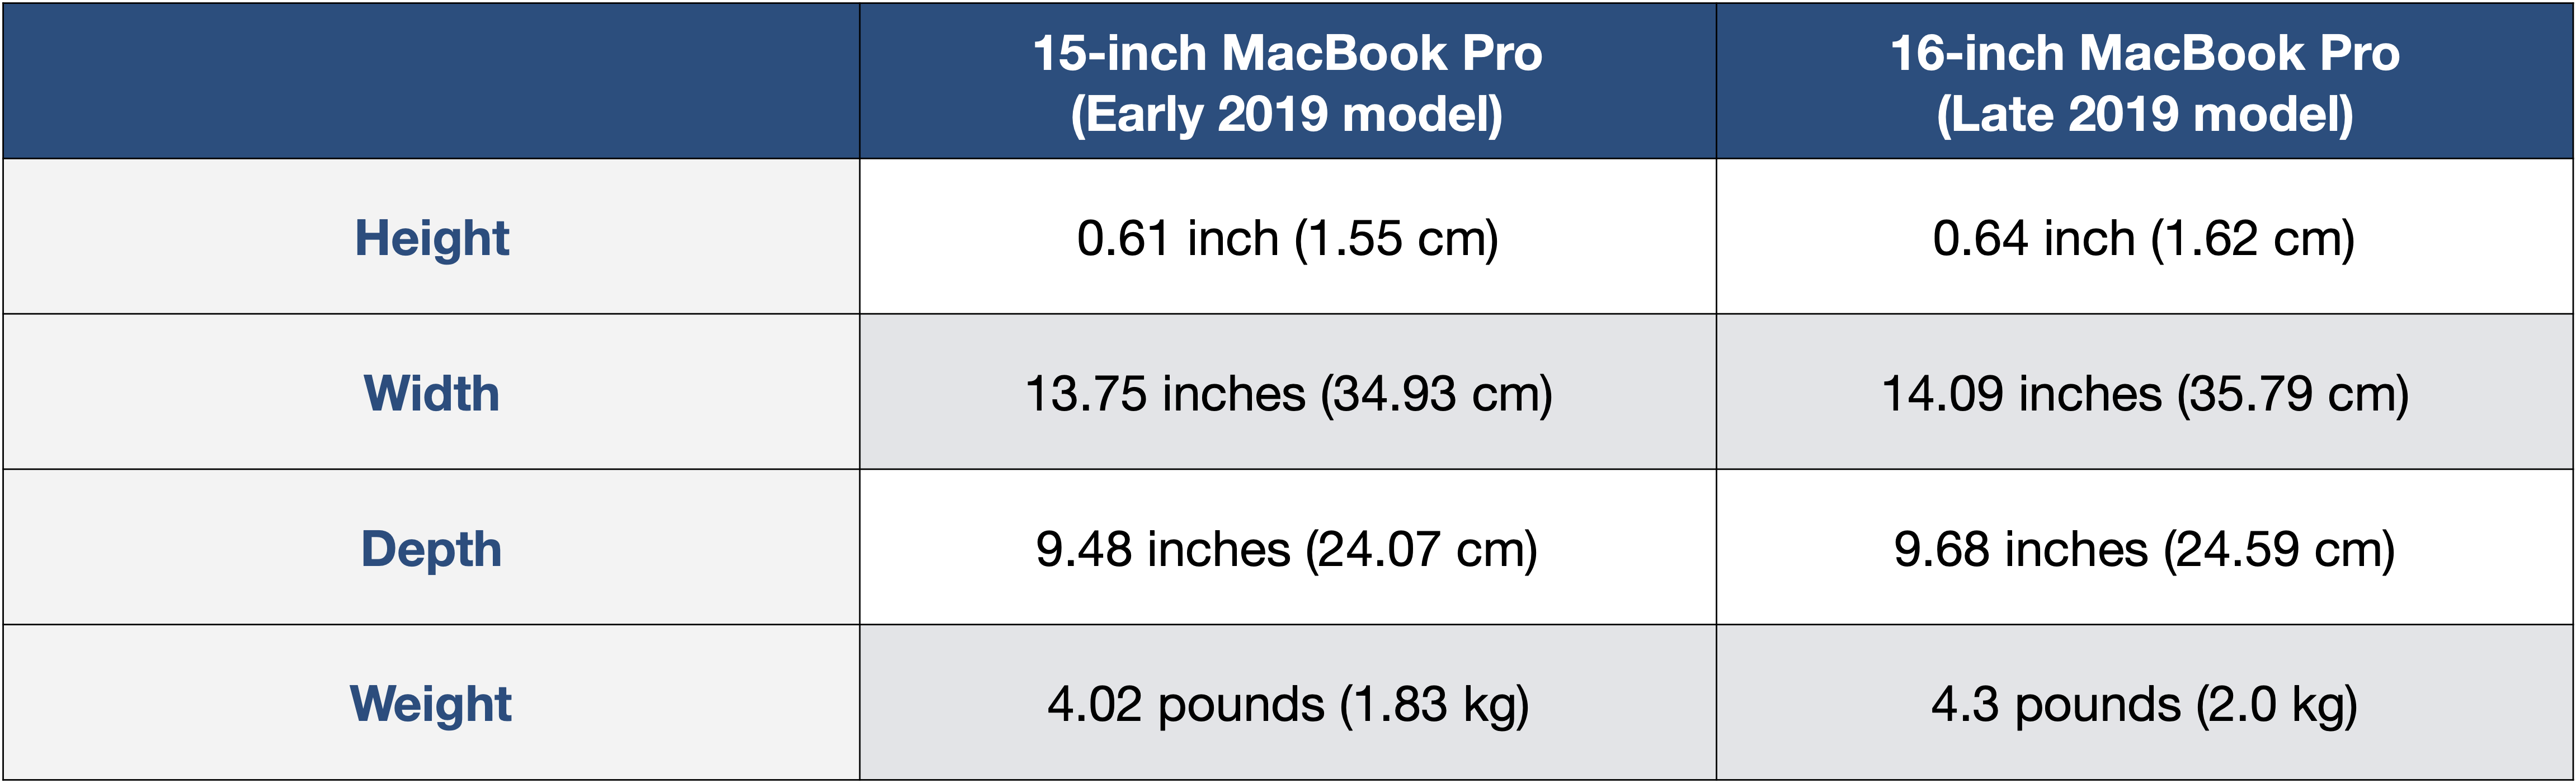 macbook pro 15 retina dimensions